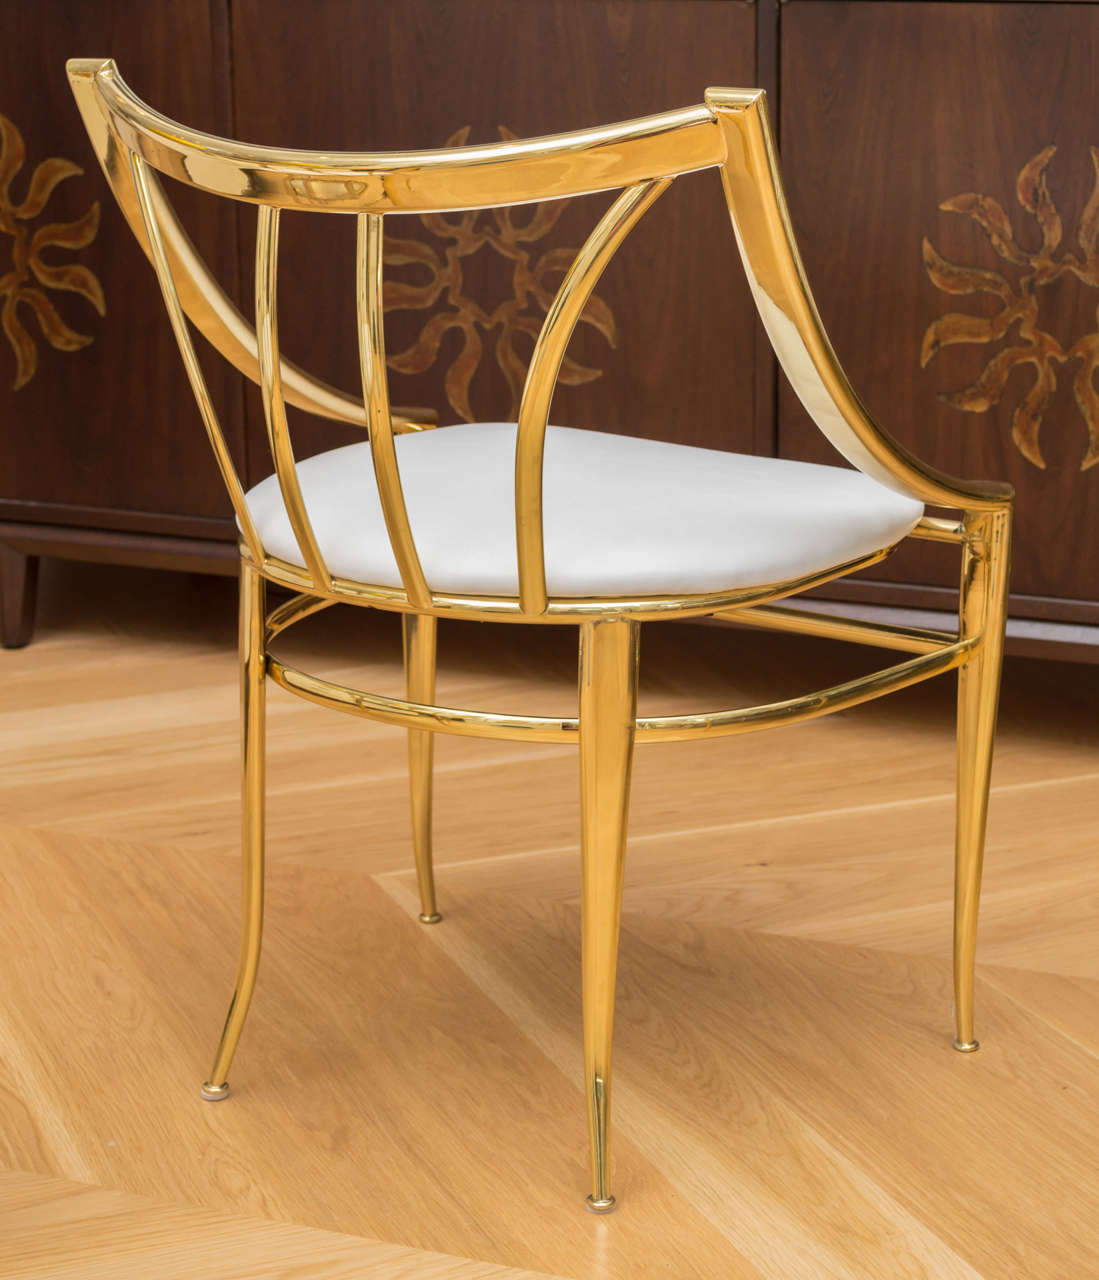 Mid-20th Century Italian Brass Chairs